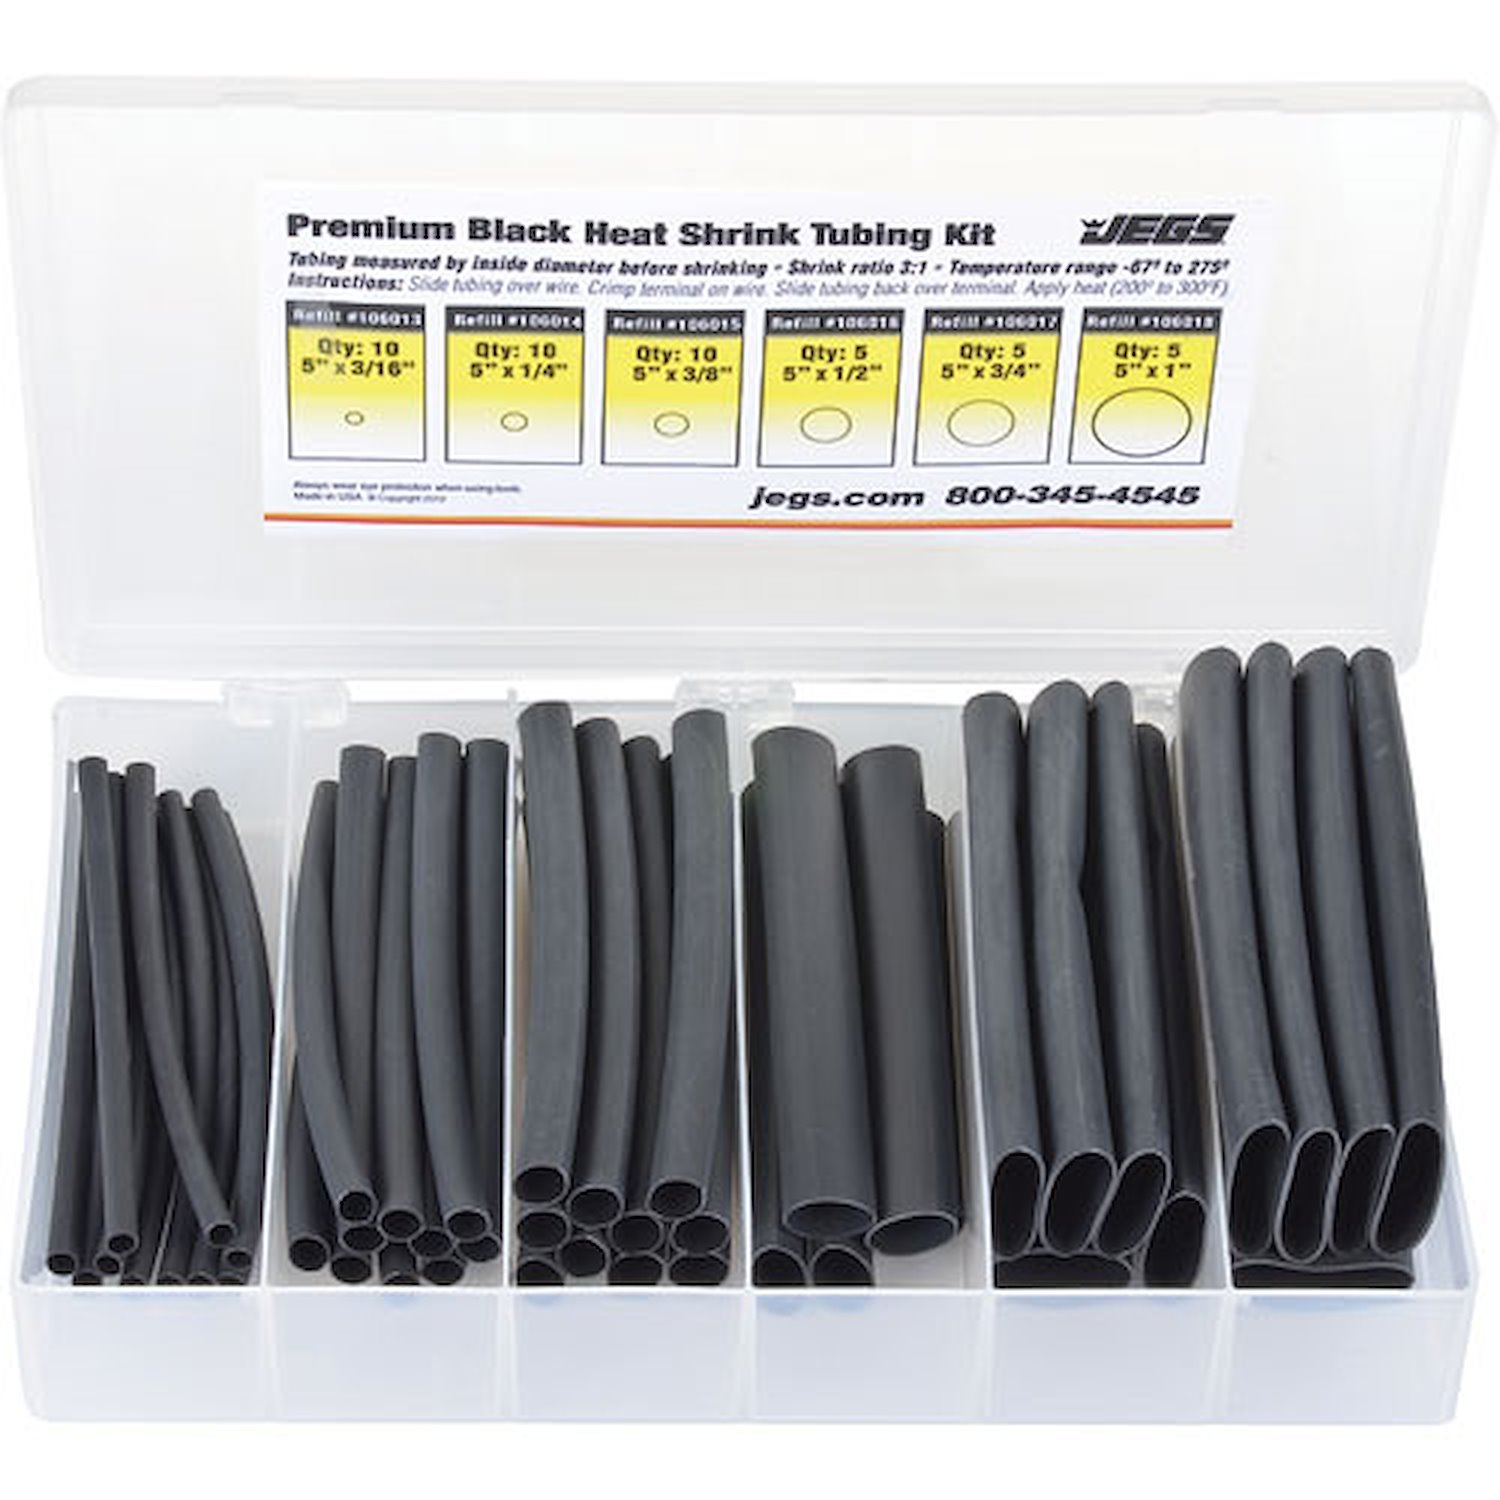 Black Premium Heat Shrink Tubing Kit with Storage Case 45 Piece